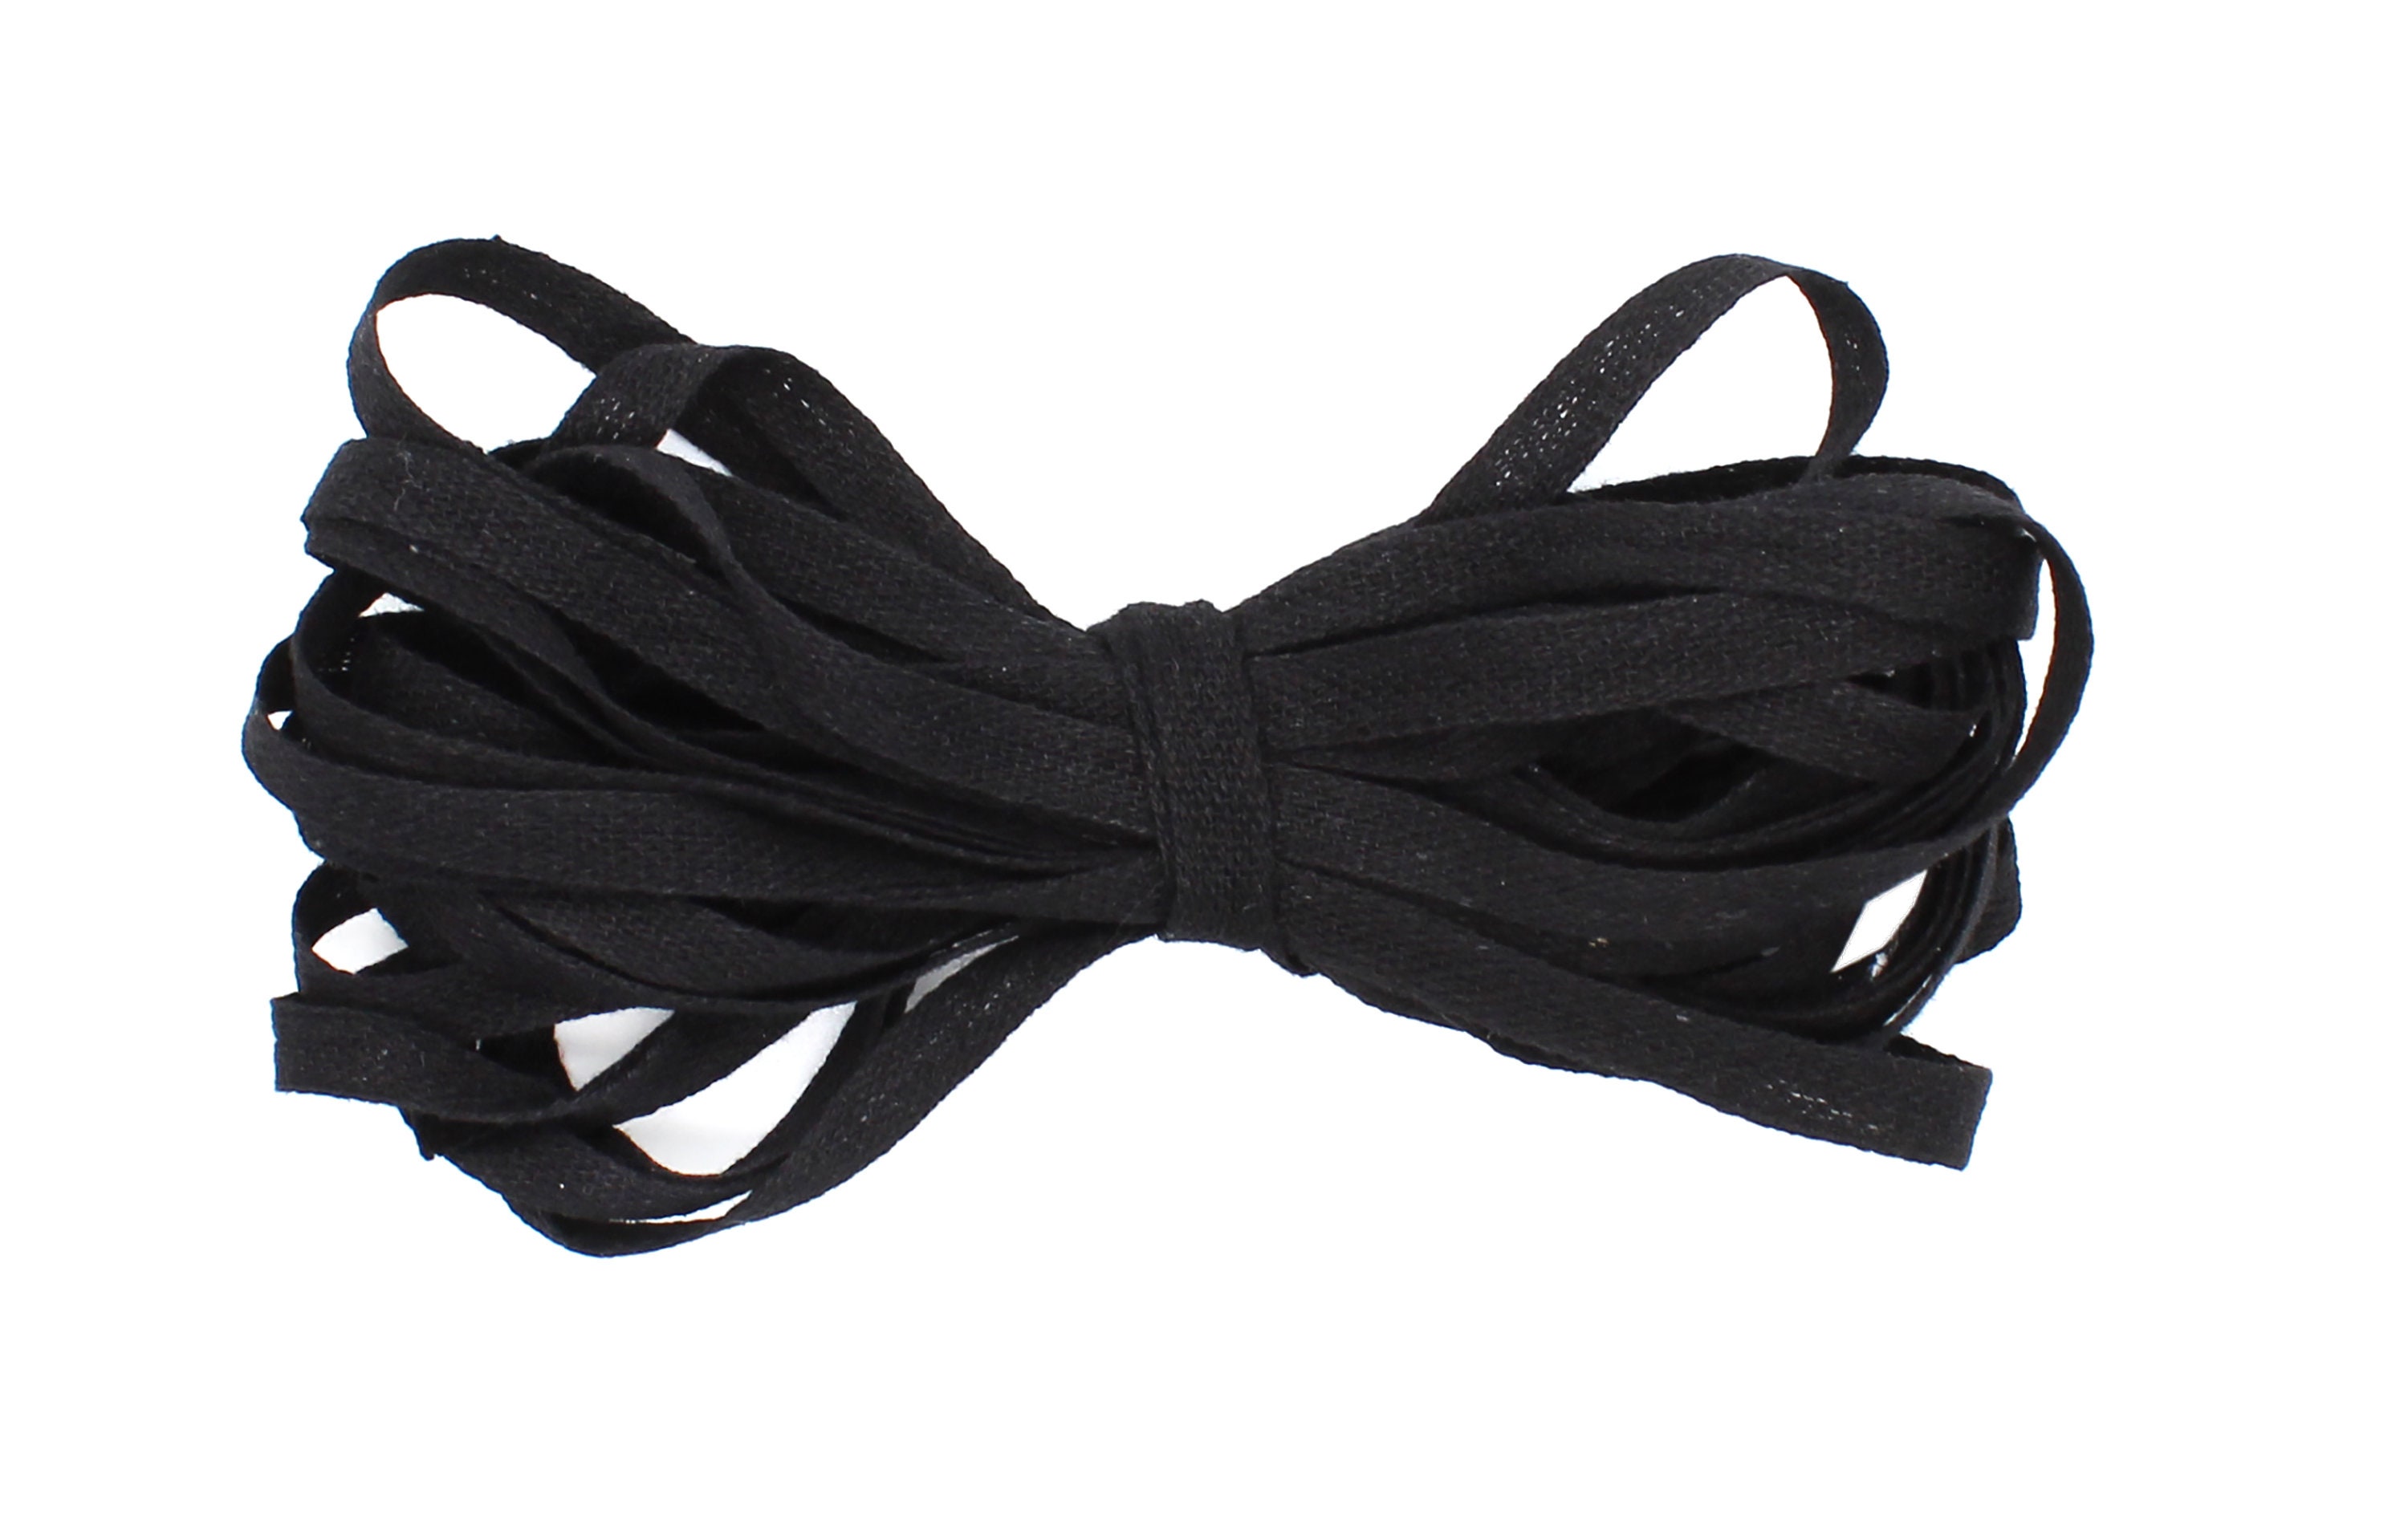 5 Yard Cotton Twill Tape Ribbon, Soft Natural Webbing Tape Herringbone –  Hobby Trendy